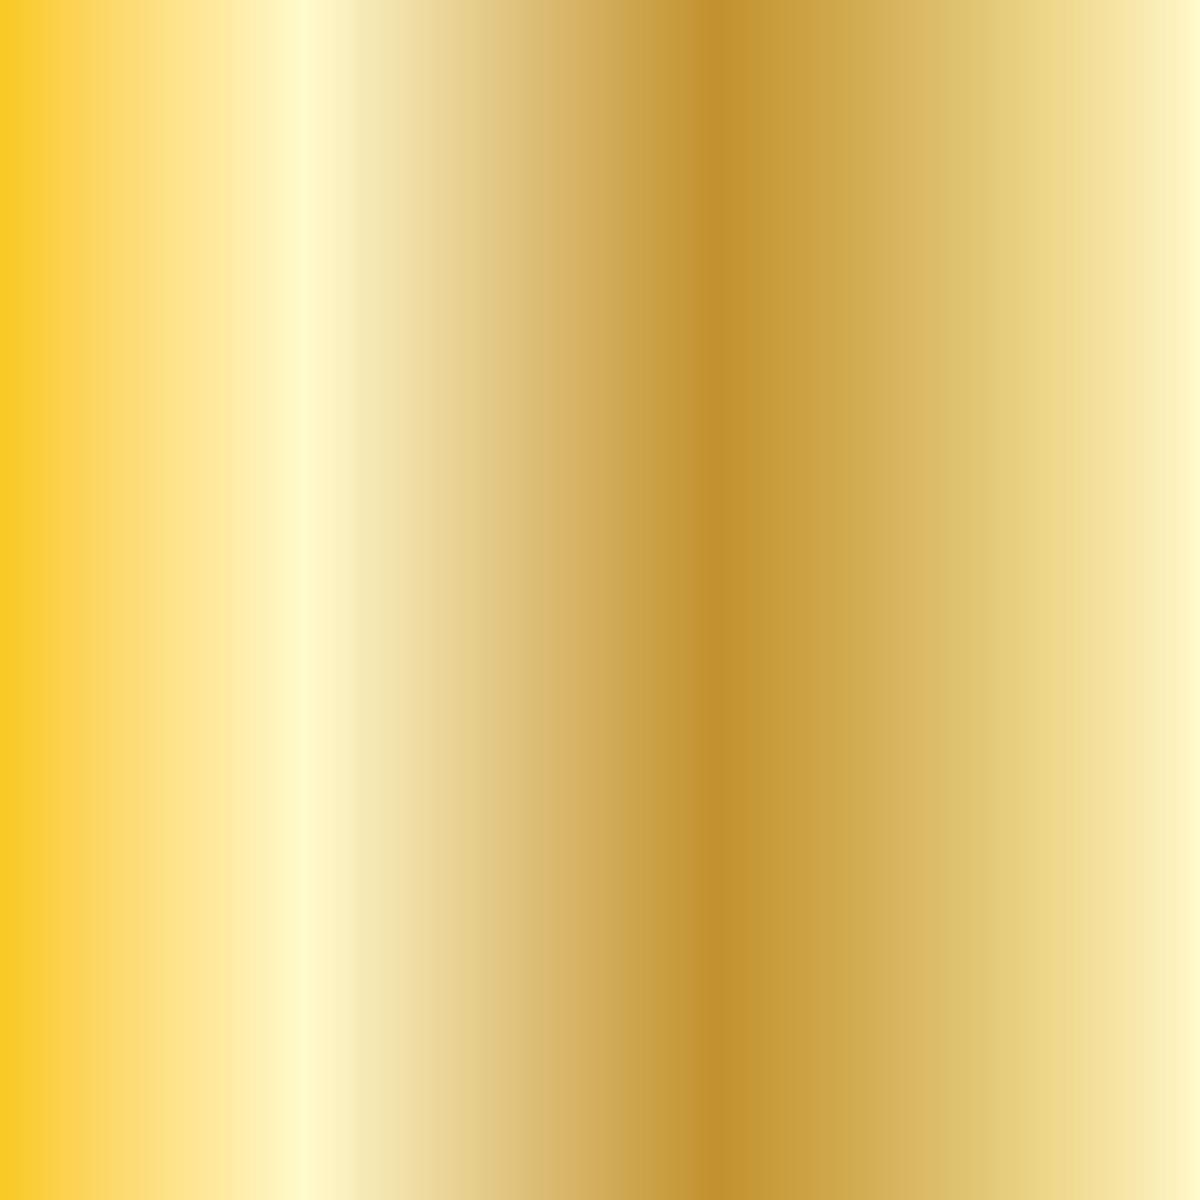 FolkArt ® Brushed Metal™ Acrylic Paint - Gold, 2 oz. - 5121